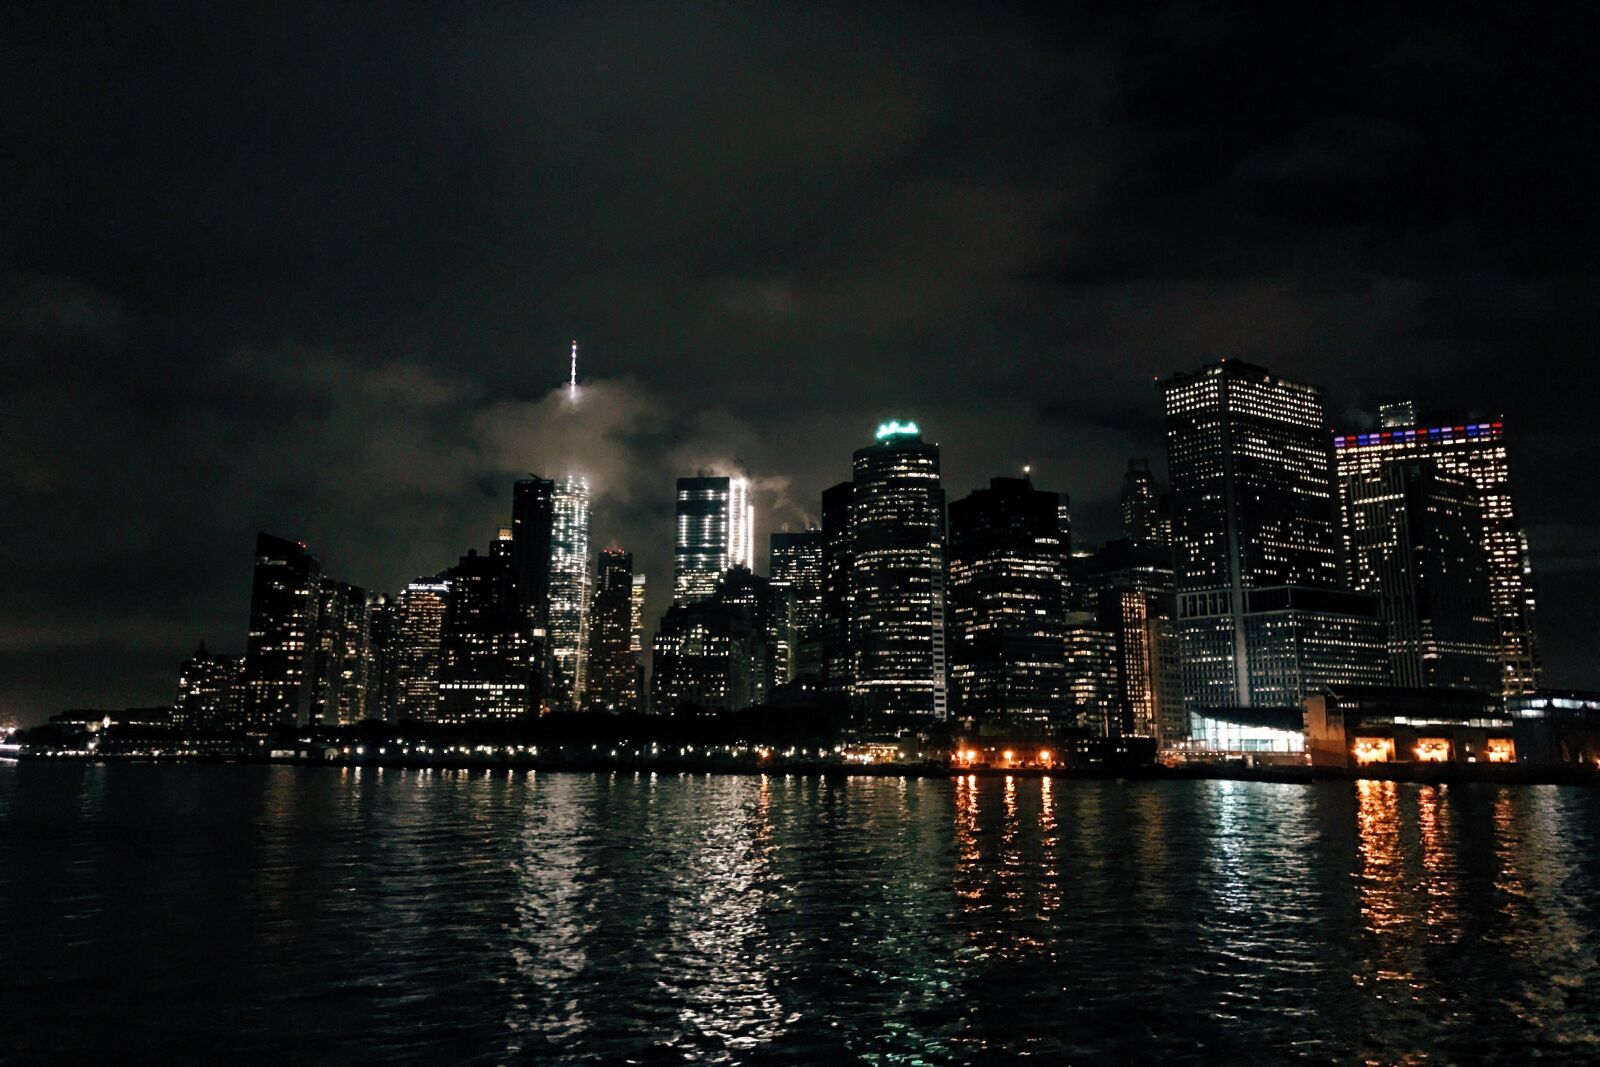 iPhone 7 Plus back iSight Duo camera 3.99mm f/1.8 sample photo. Night, new york city photography